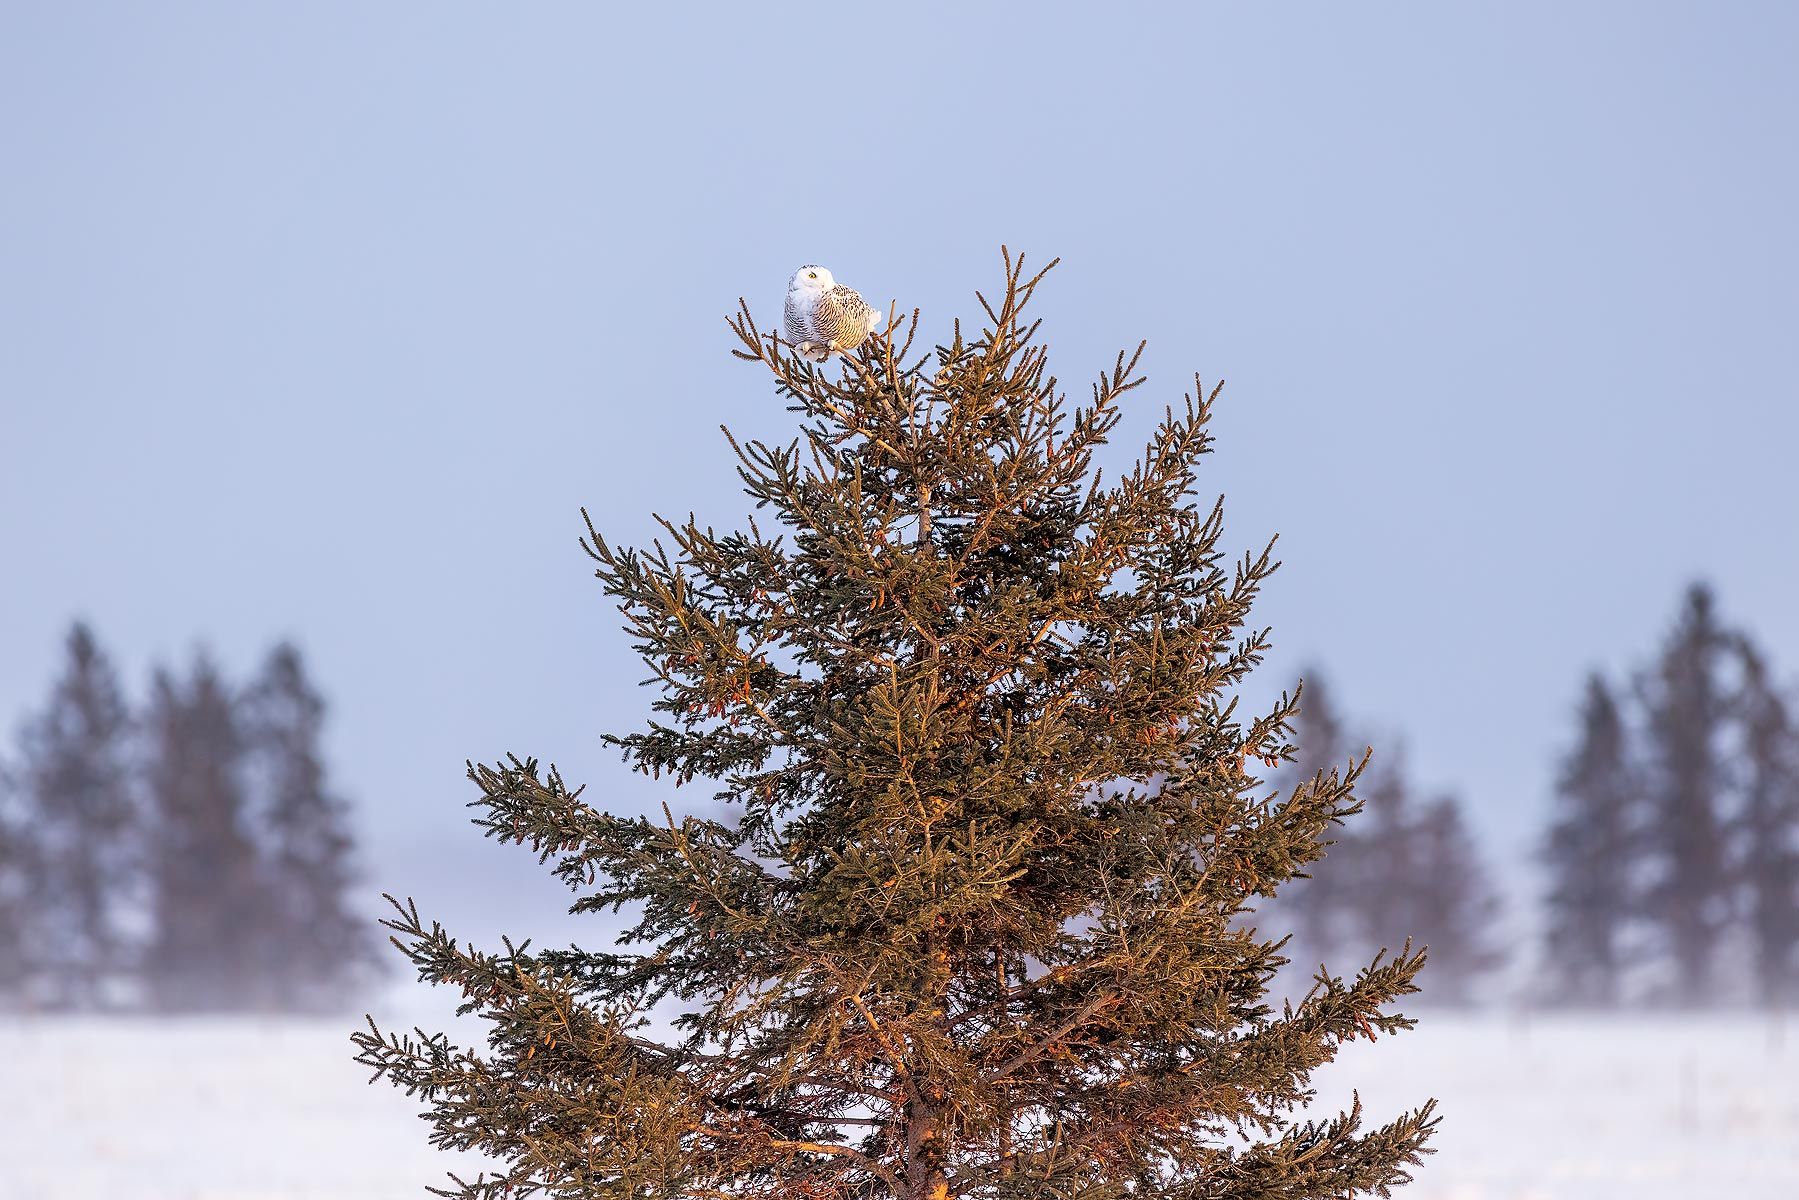 Snowy-owl-on-top-of-pine-tree_F0A4405.jpg